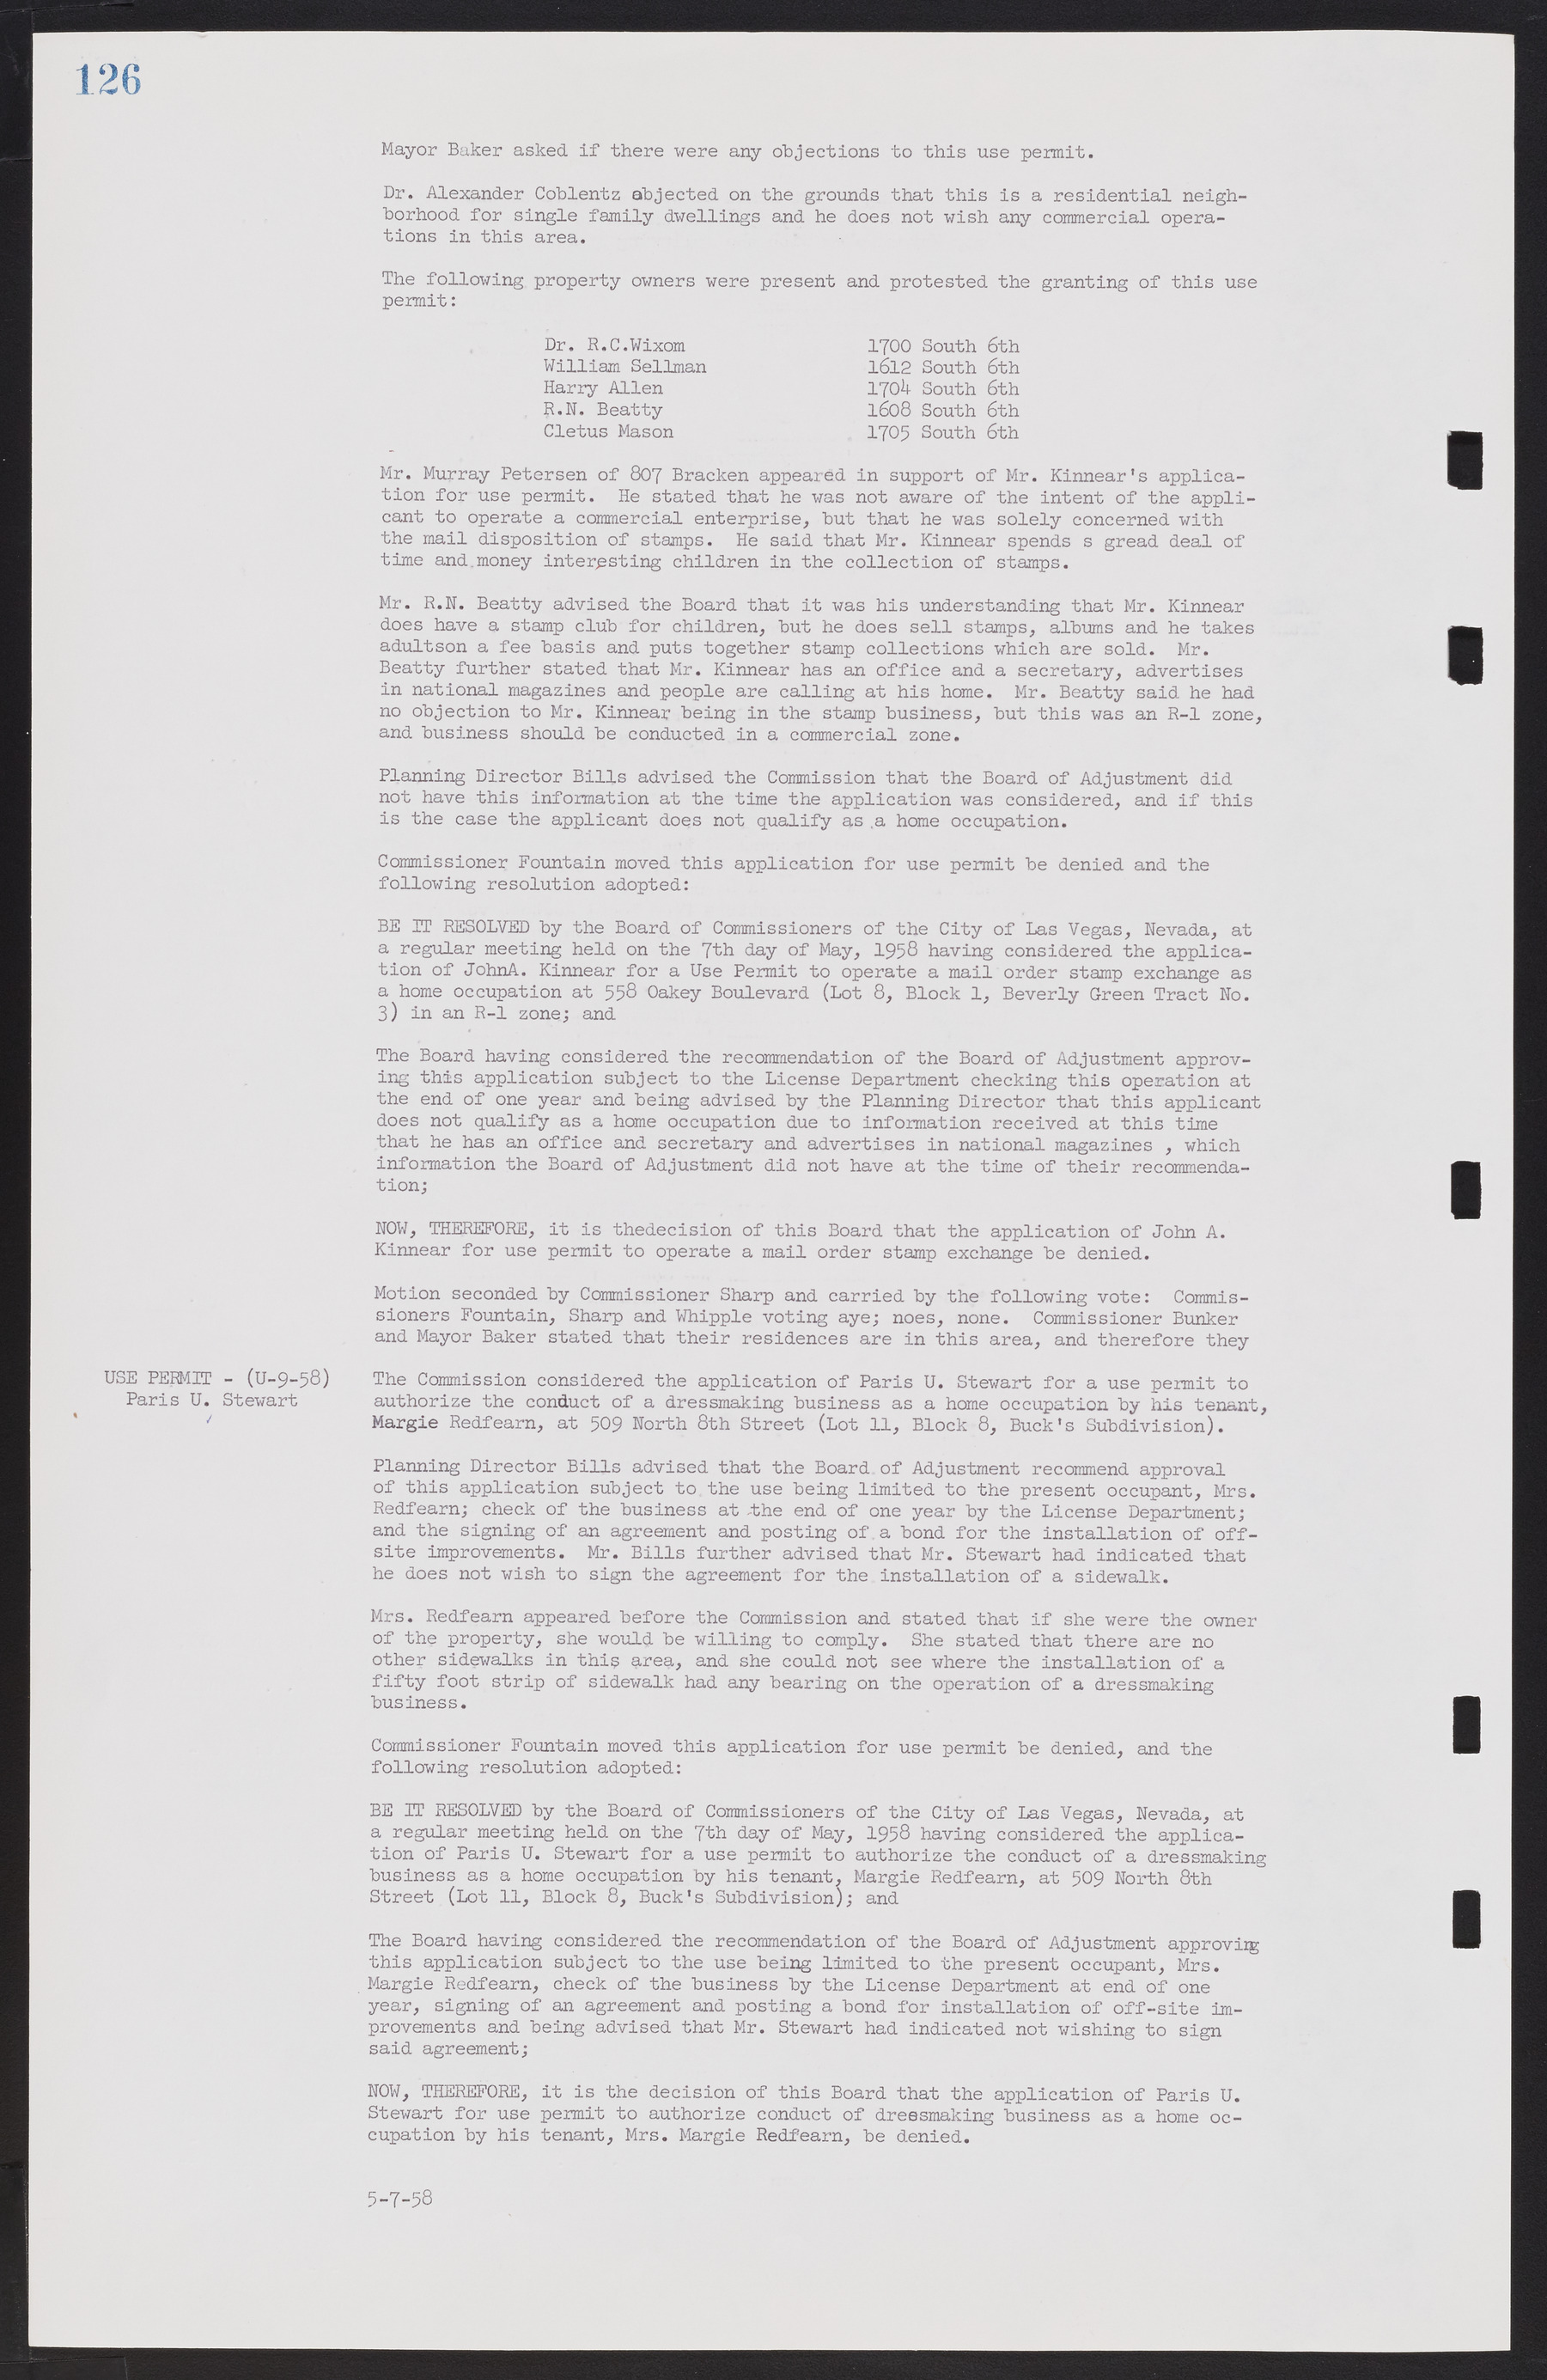 Las Vegas City Commission Minutes, November 20, 1957 to December 2, 1959, lvc000011-130